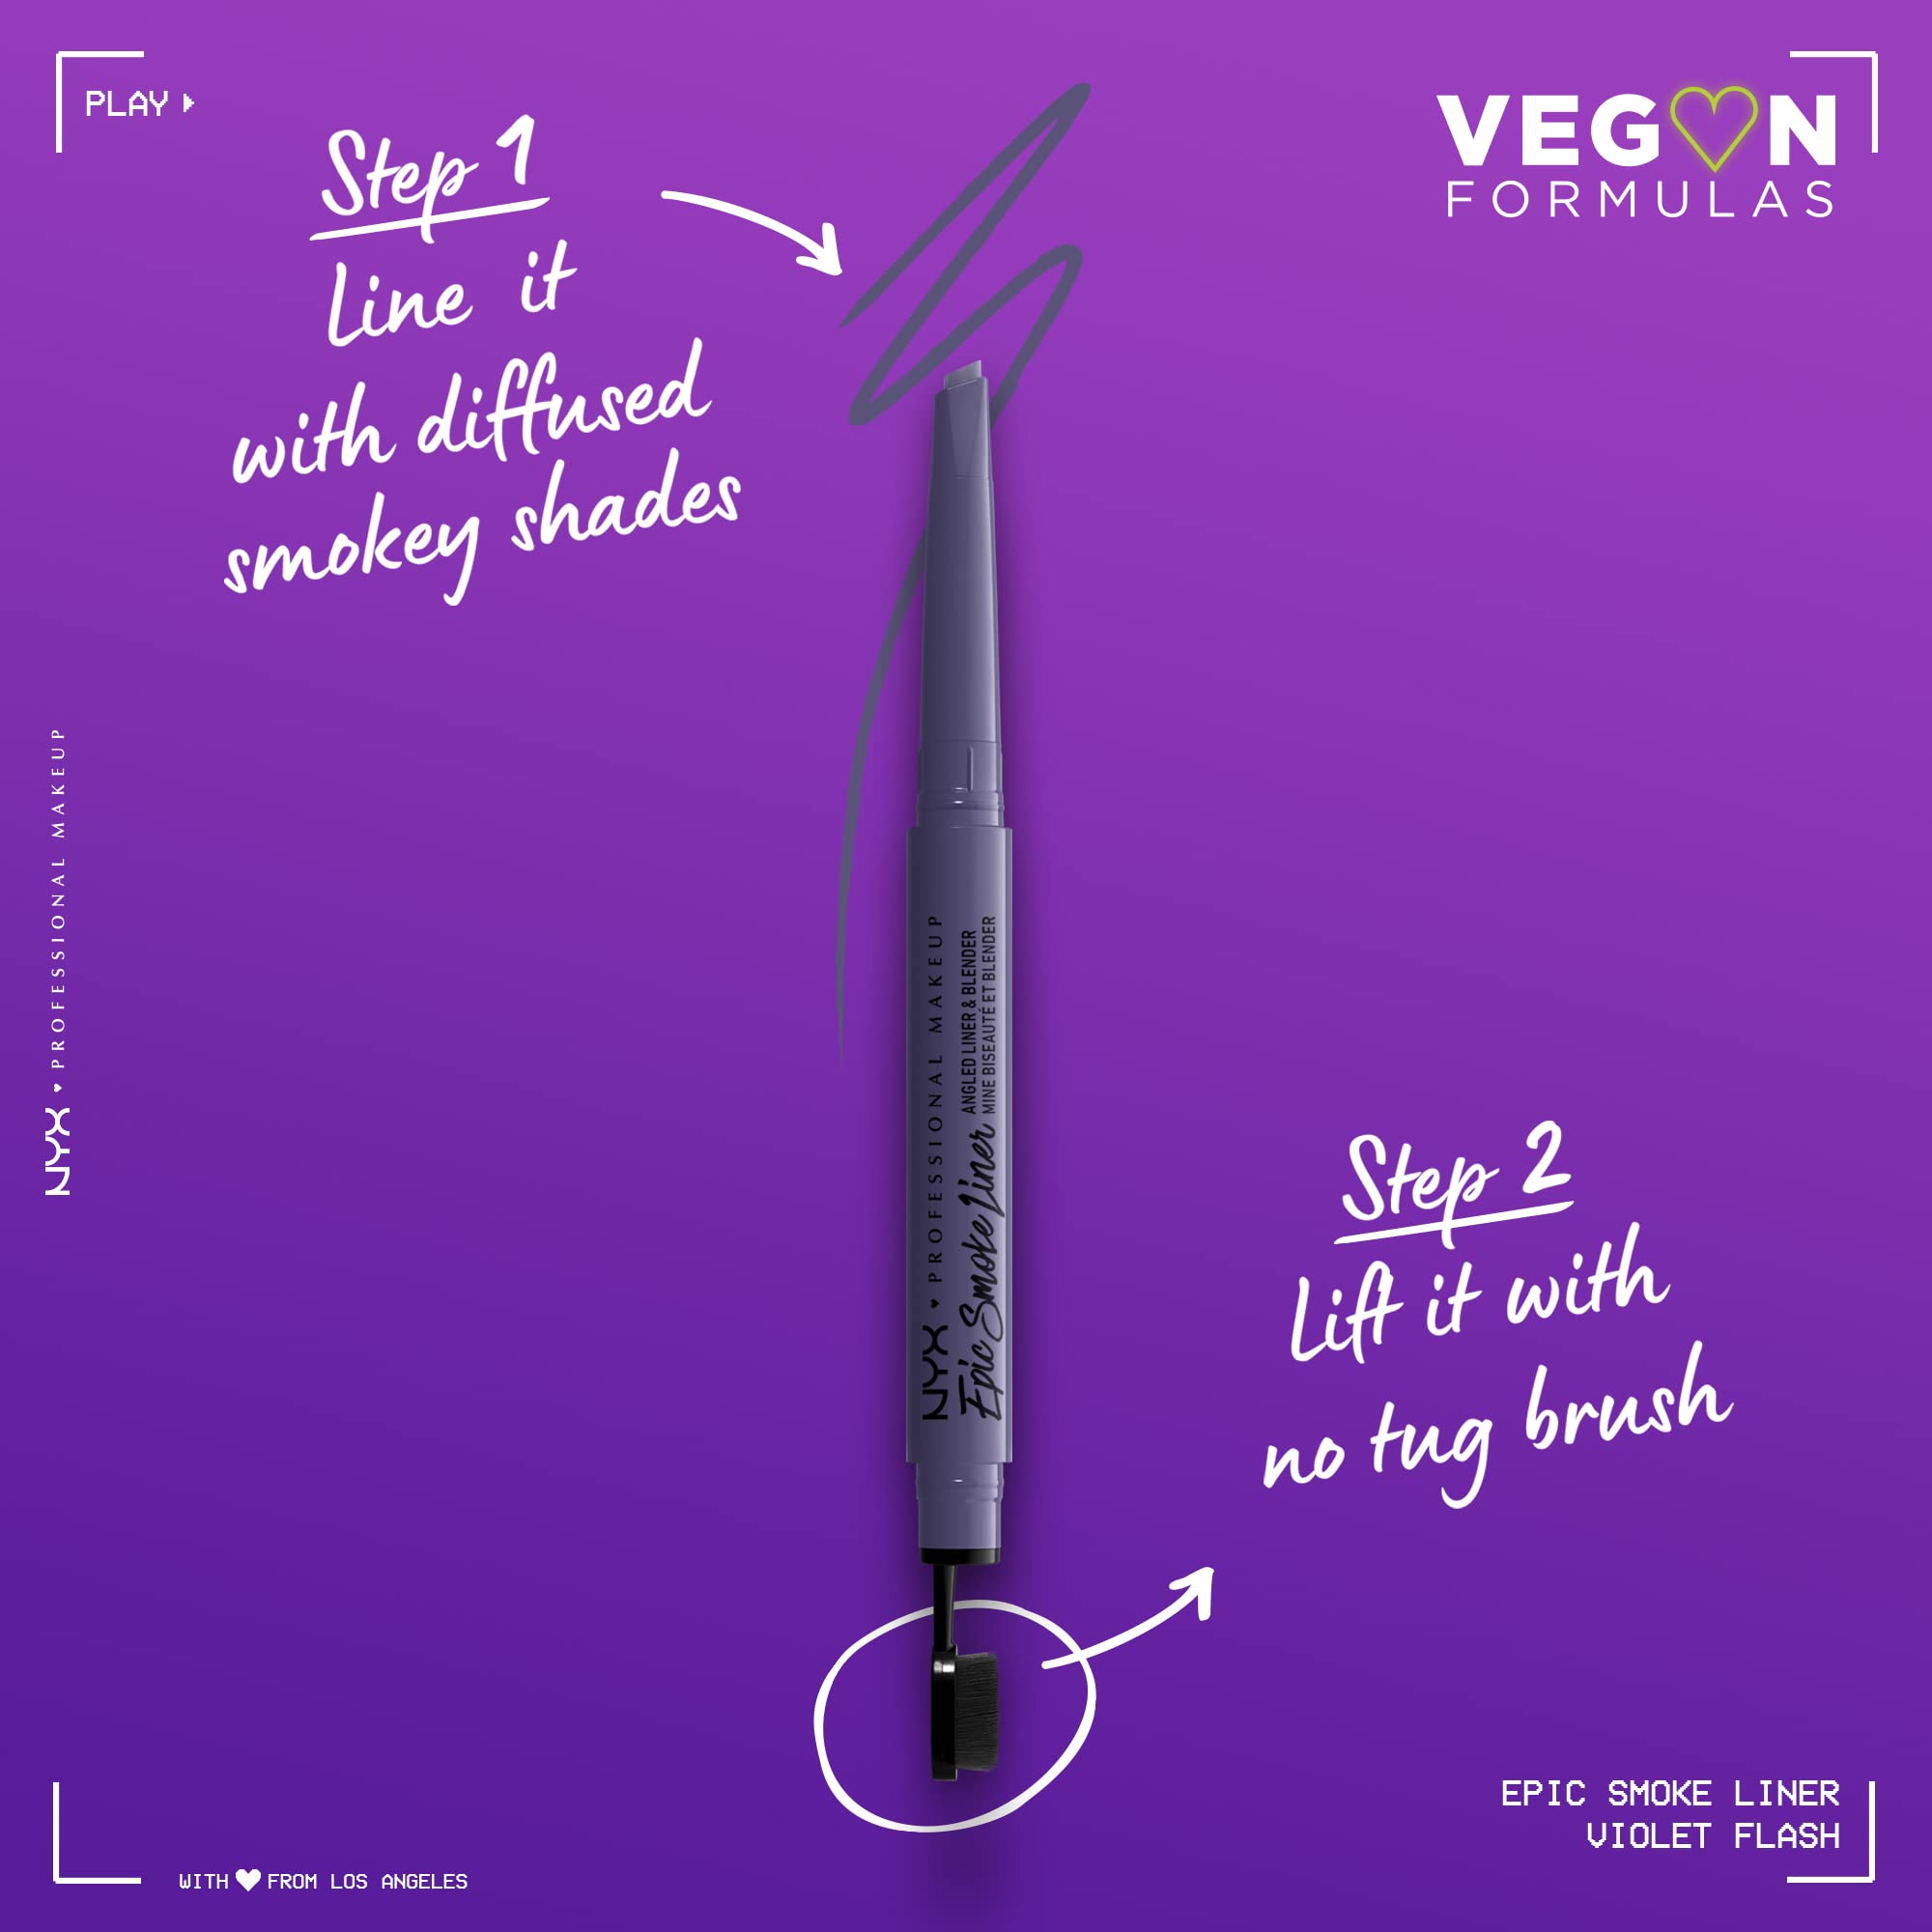 NYX PROFESSIONAL MAKEUP Epic Smoke Liner, Vegan Smokey Eyeliner - Violet Flash (Concord Grape Purple)